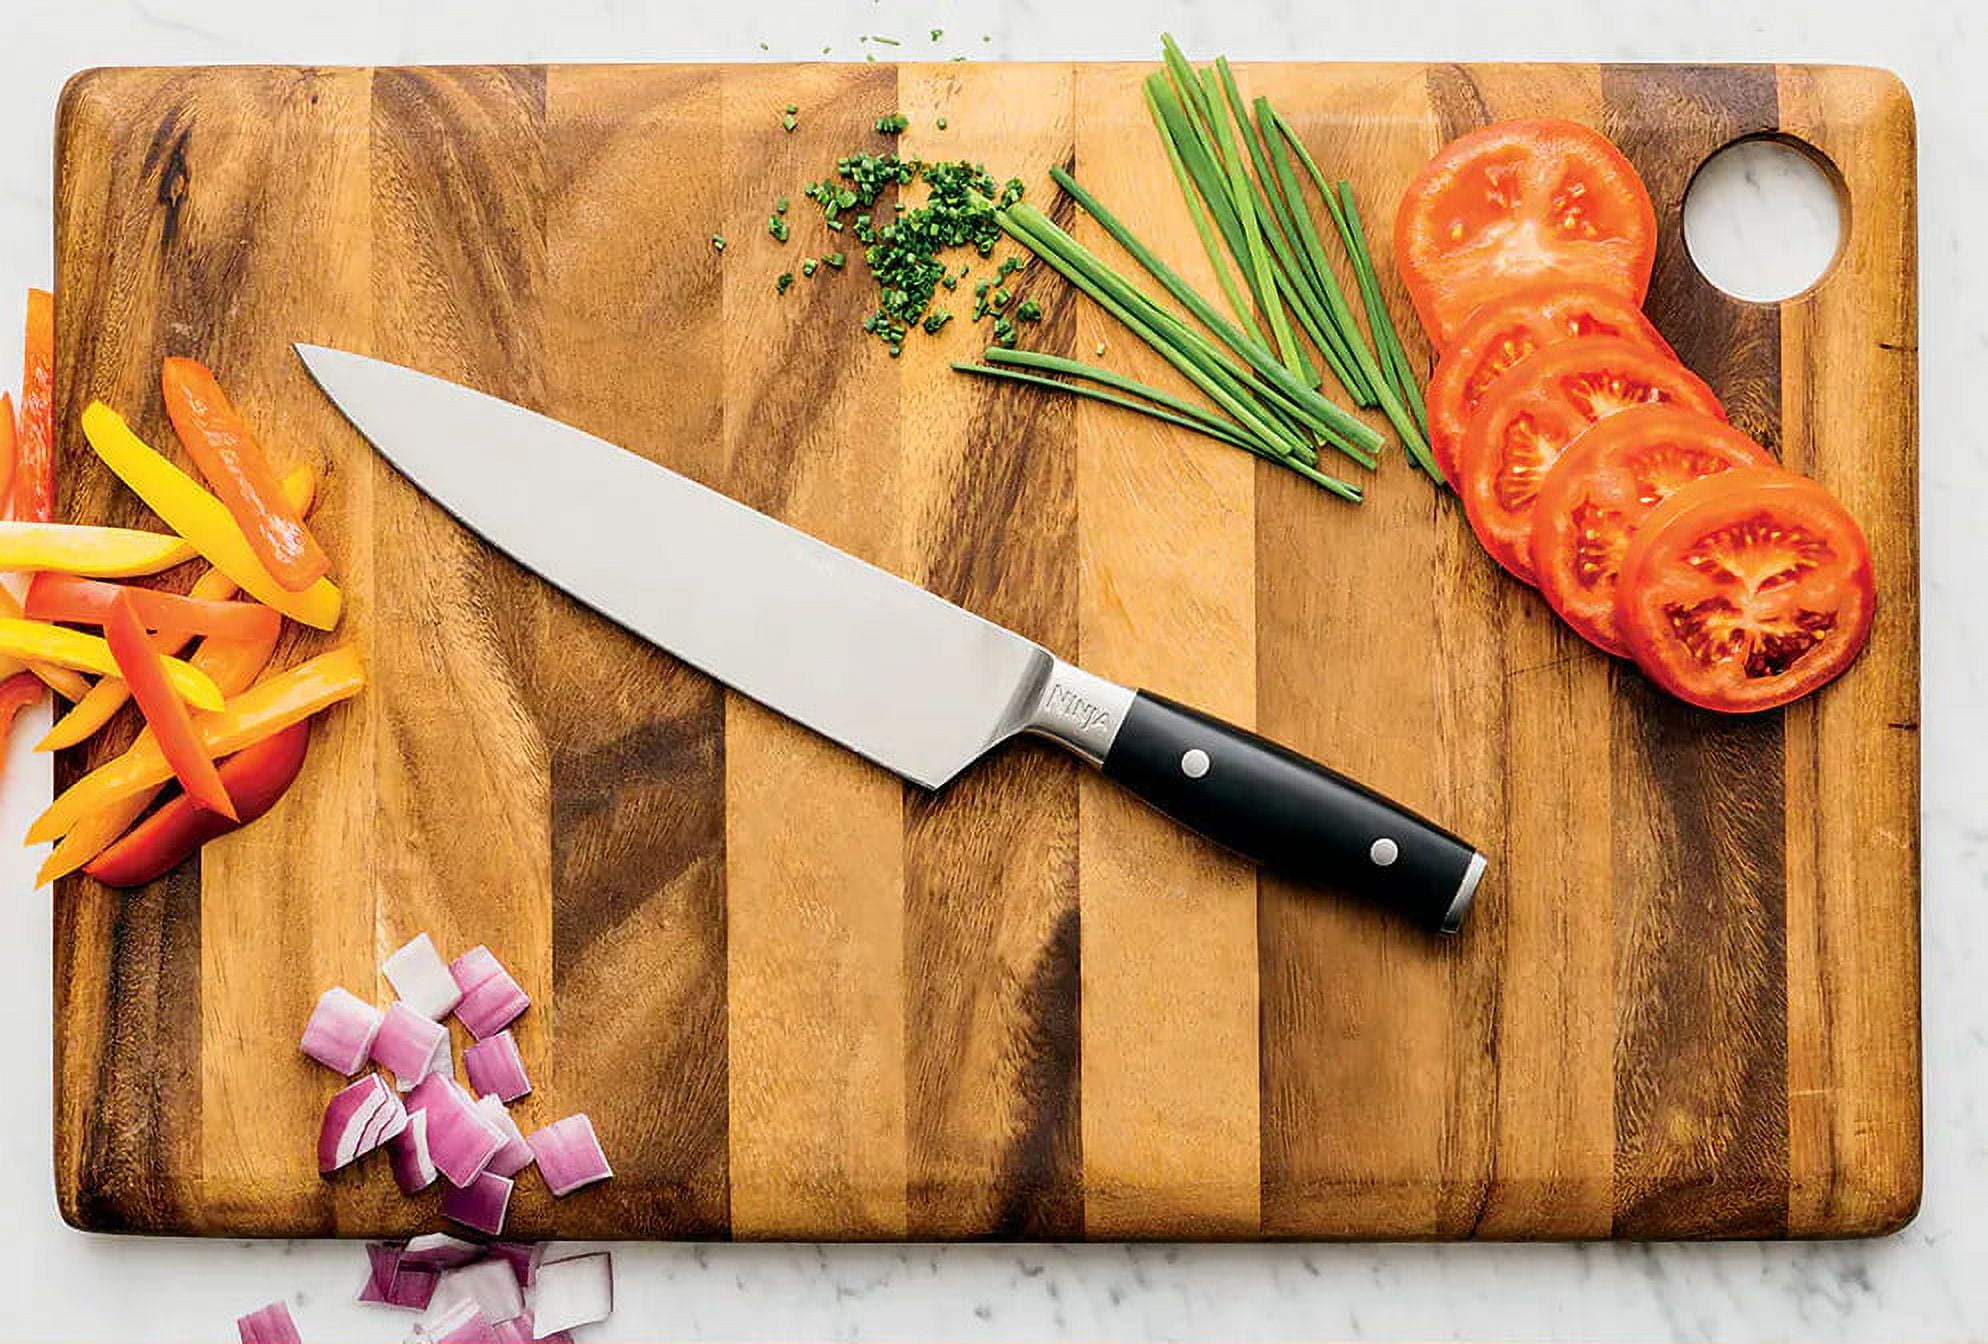 Ninja Foodi NeverDull System Premium 8-Inch Chef Knife 